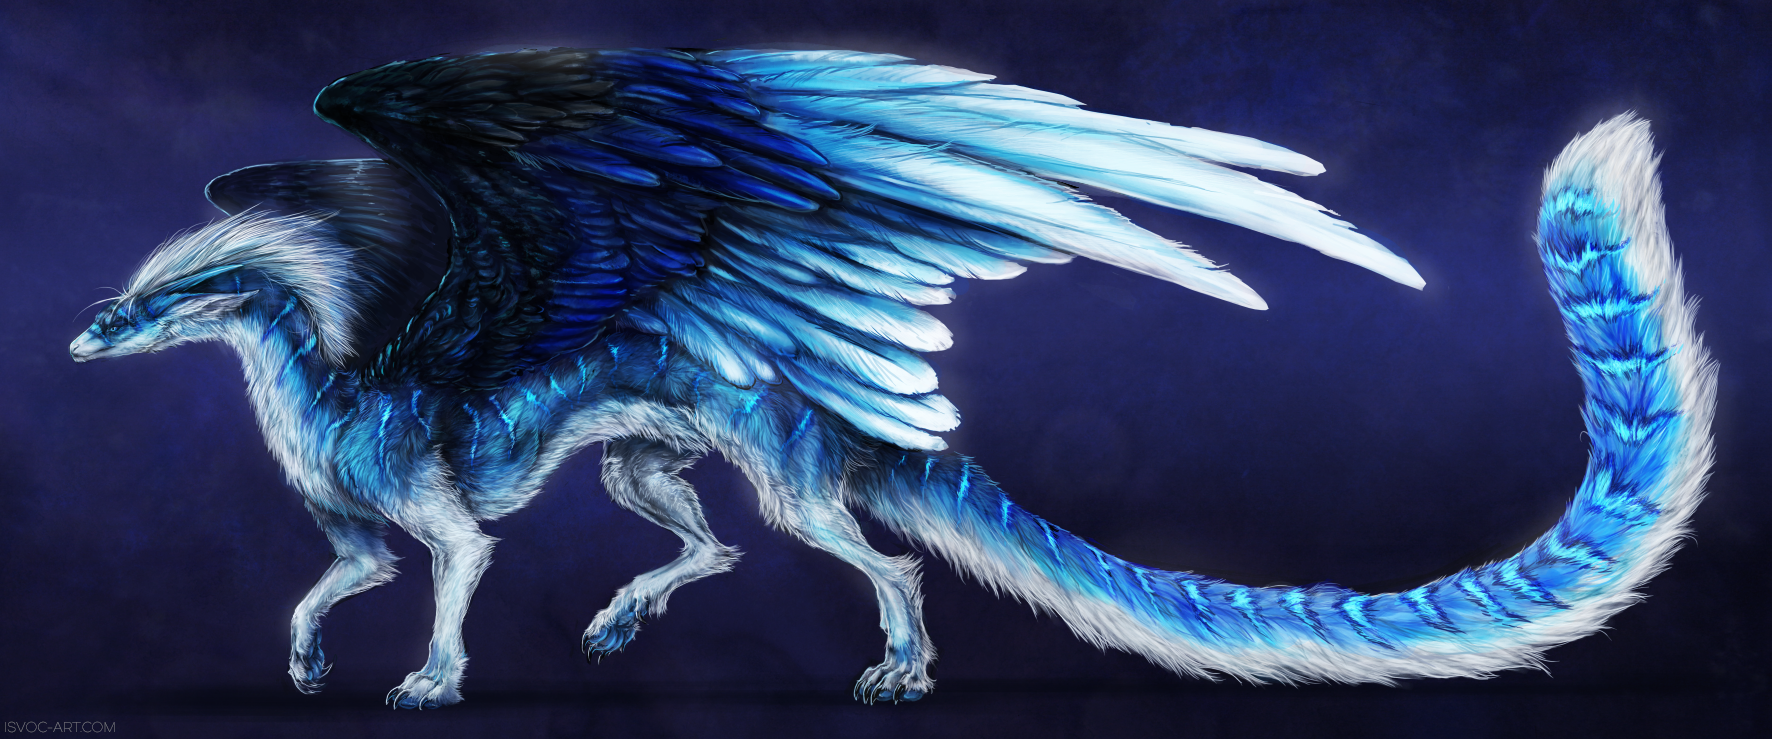 isvoc-feathers-of-blue